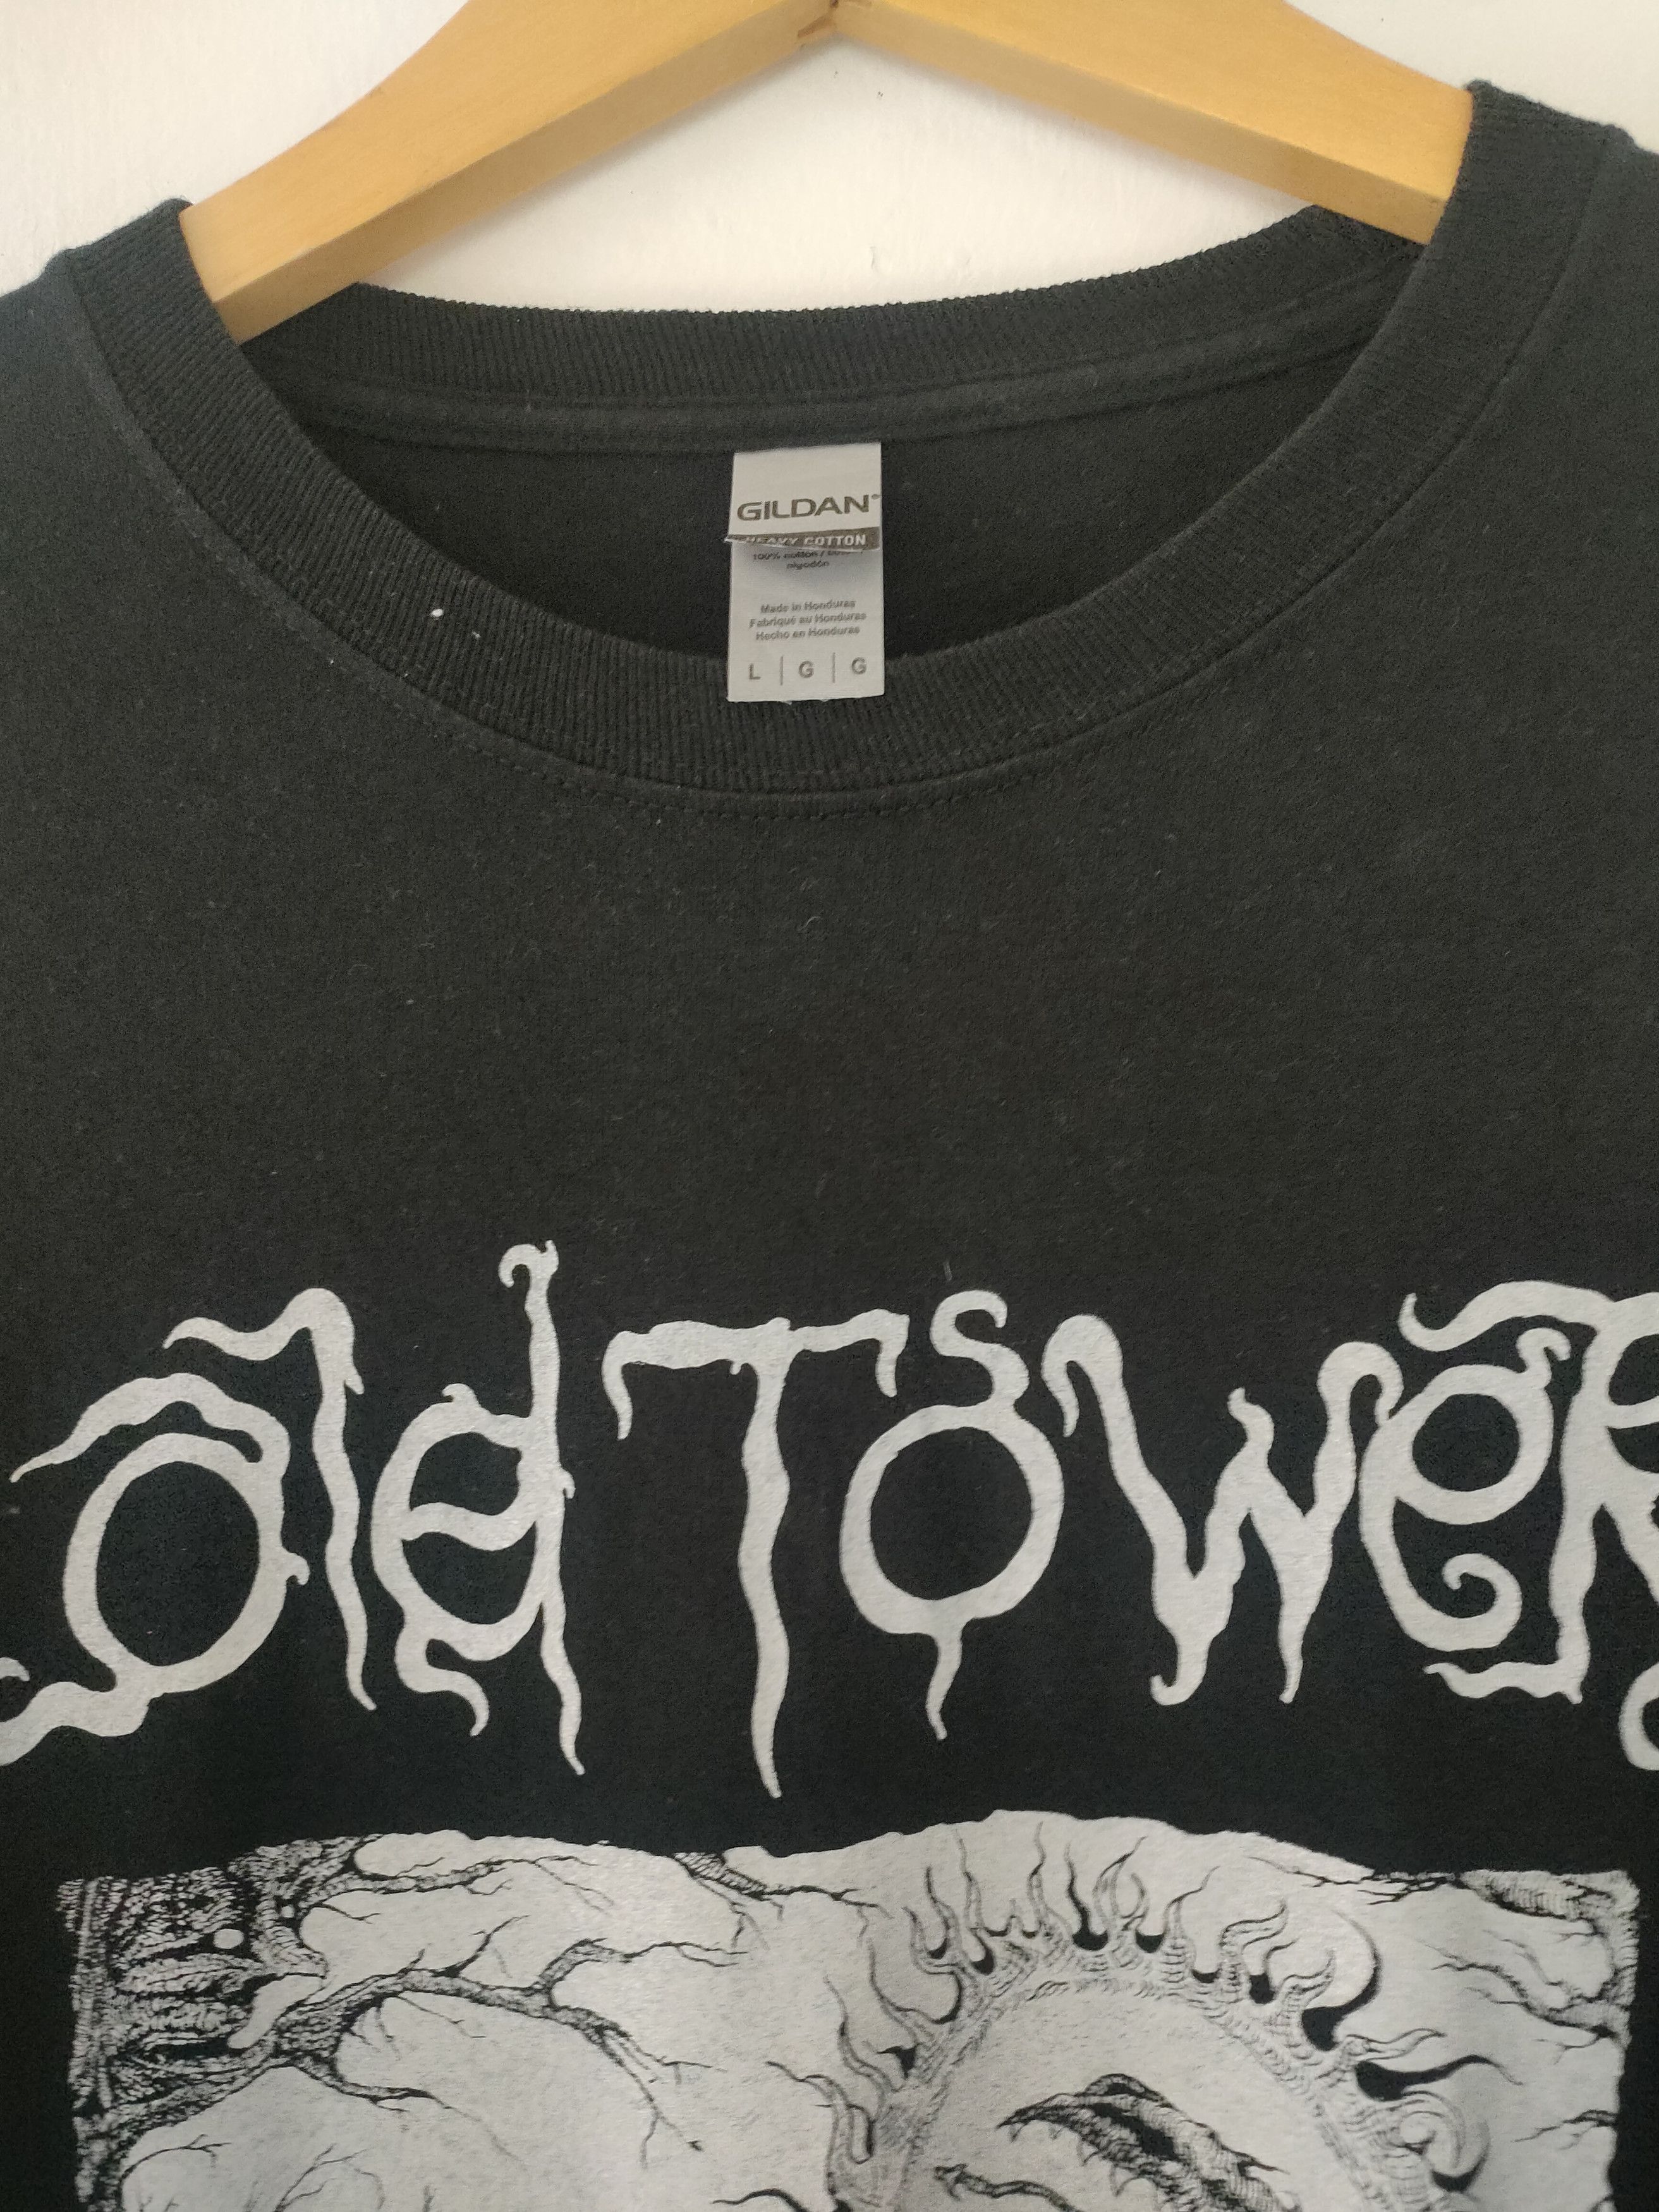 Good Music Merchandise - OLD TOWER LONG SLEEVE TEES - 7